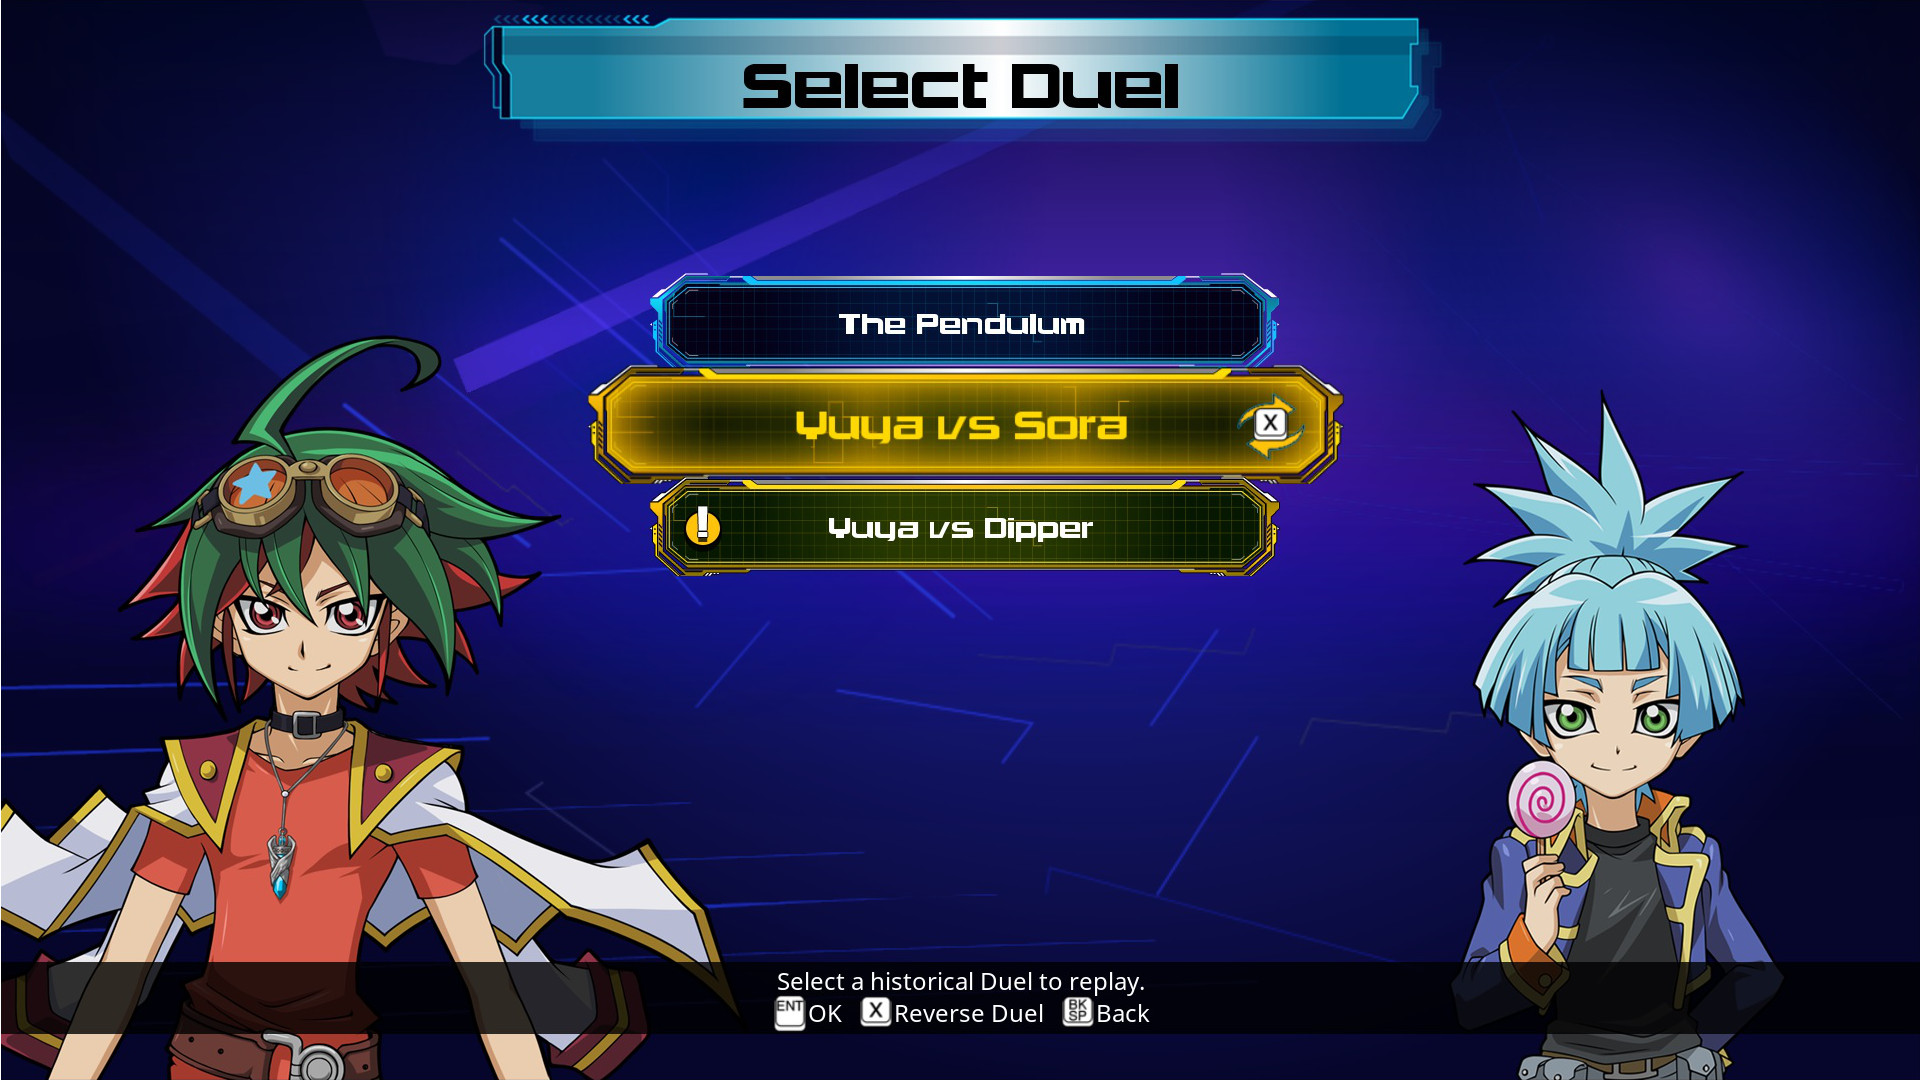 [$ 1.31] Yu-Gi-Oh! Legacy of the Duelist - ARC-V: Sora and Dipper DLC Steam CD Key